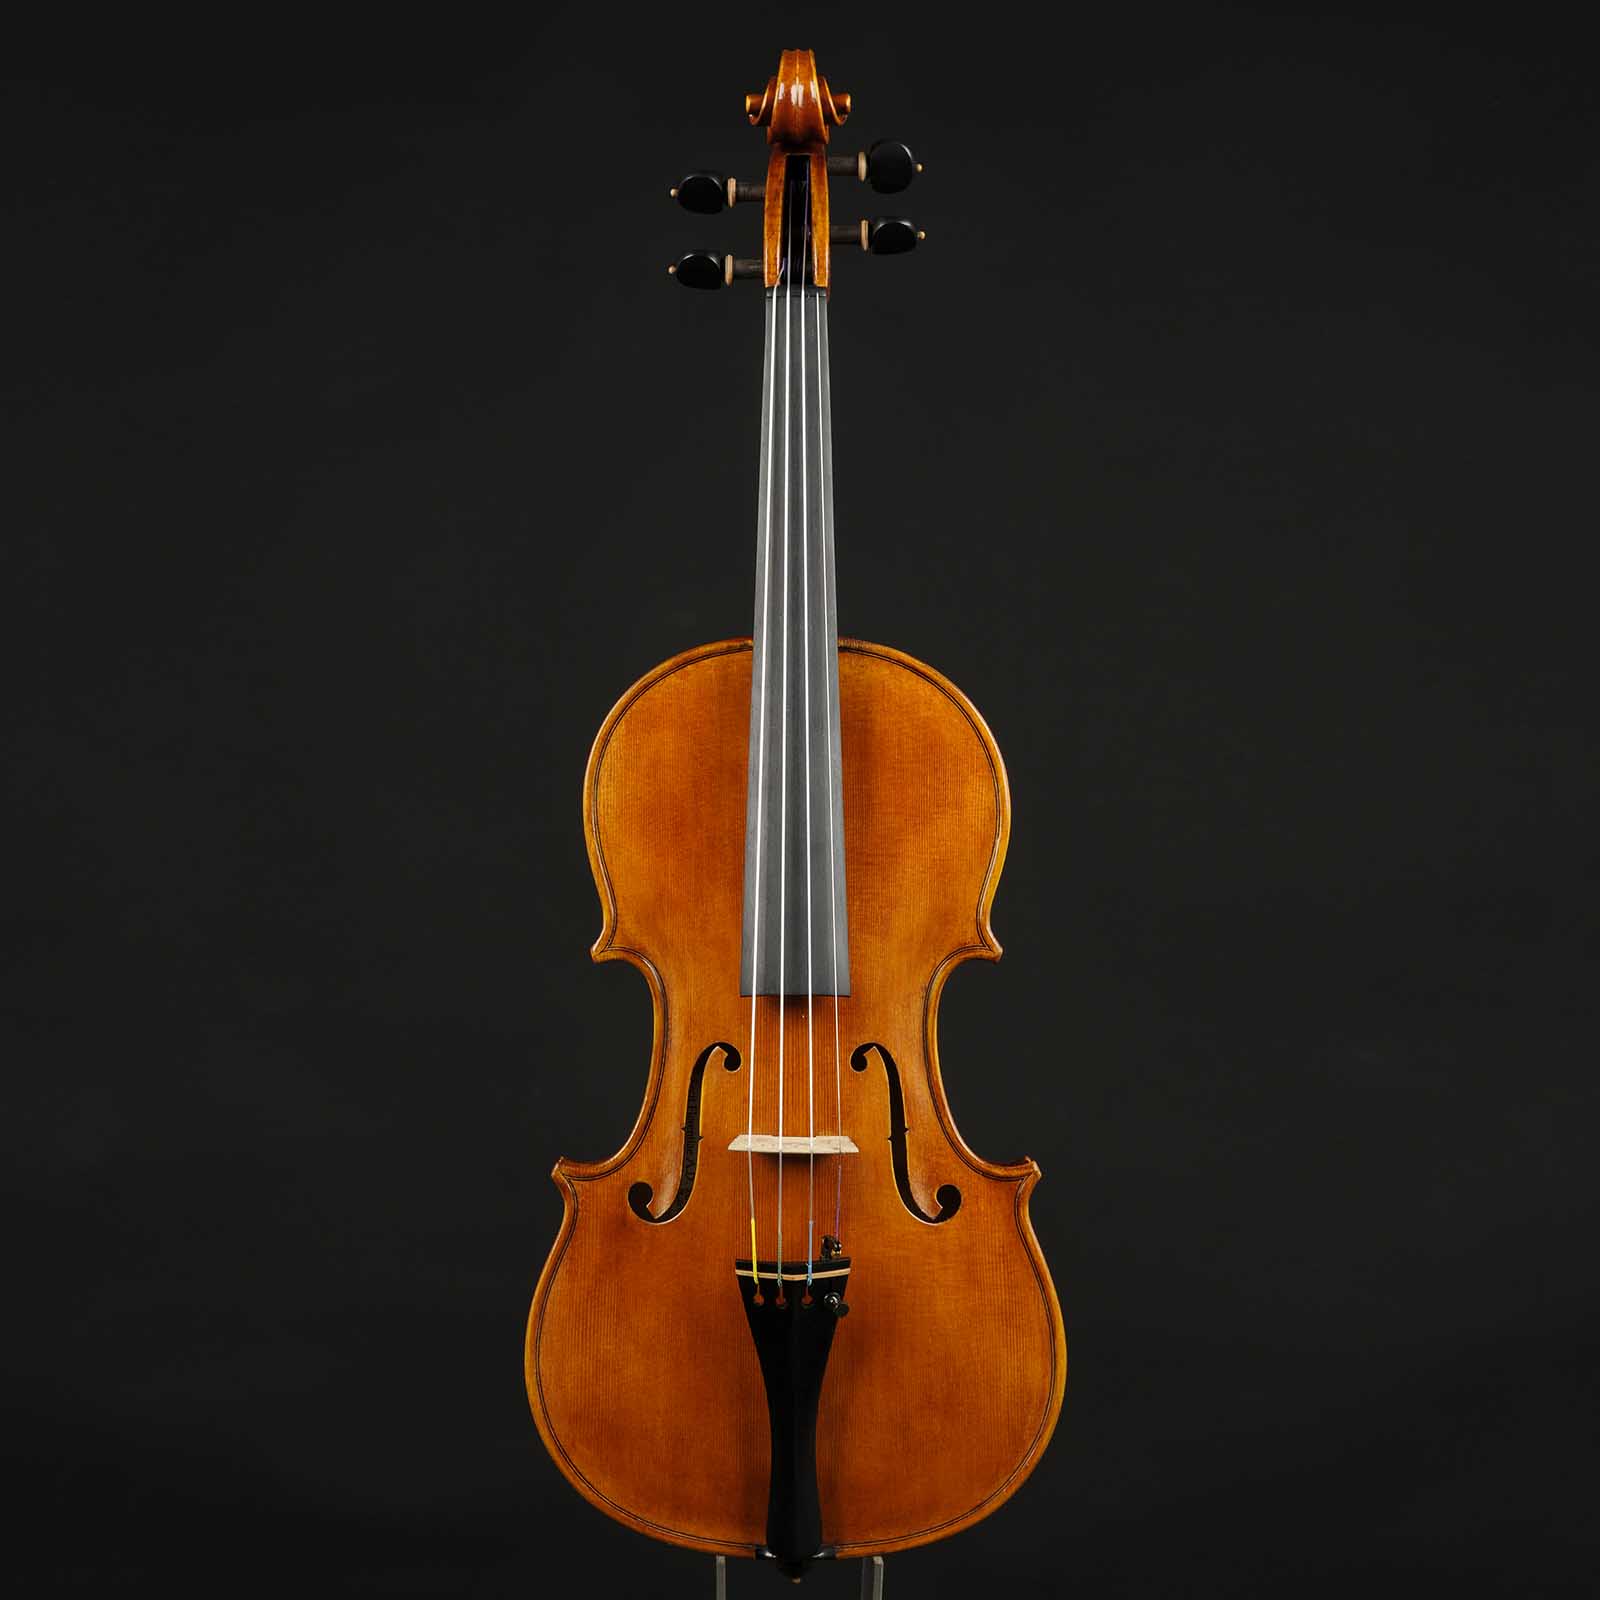 Antonio Stradivari Cremona 1717 “San Clemente“ - Image 1